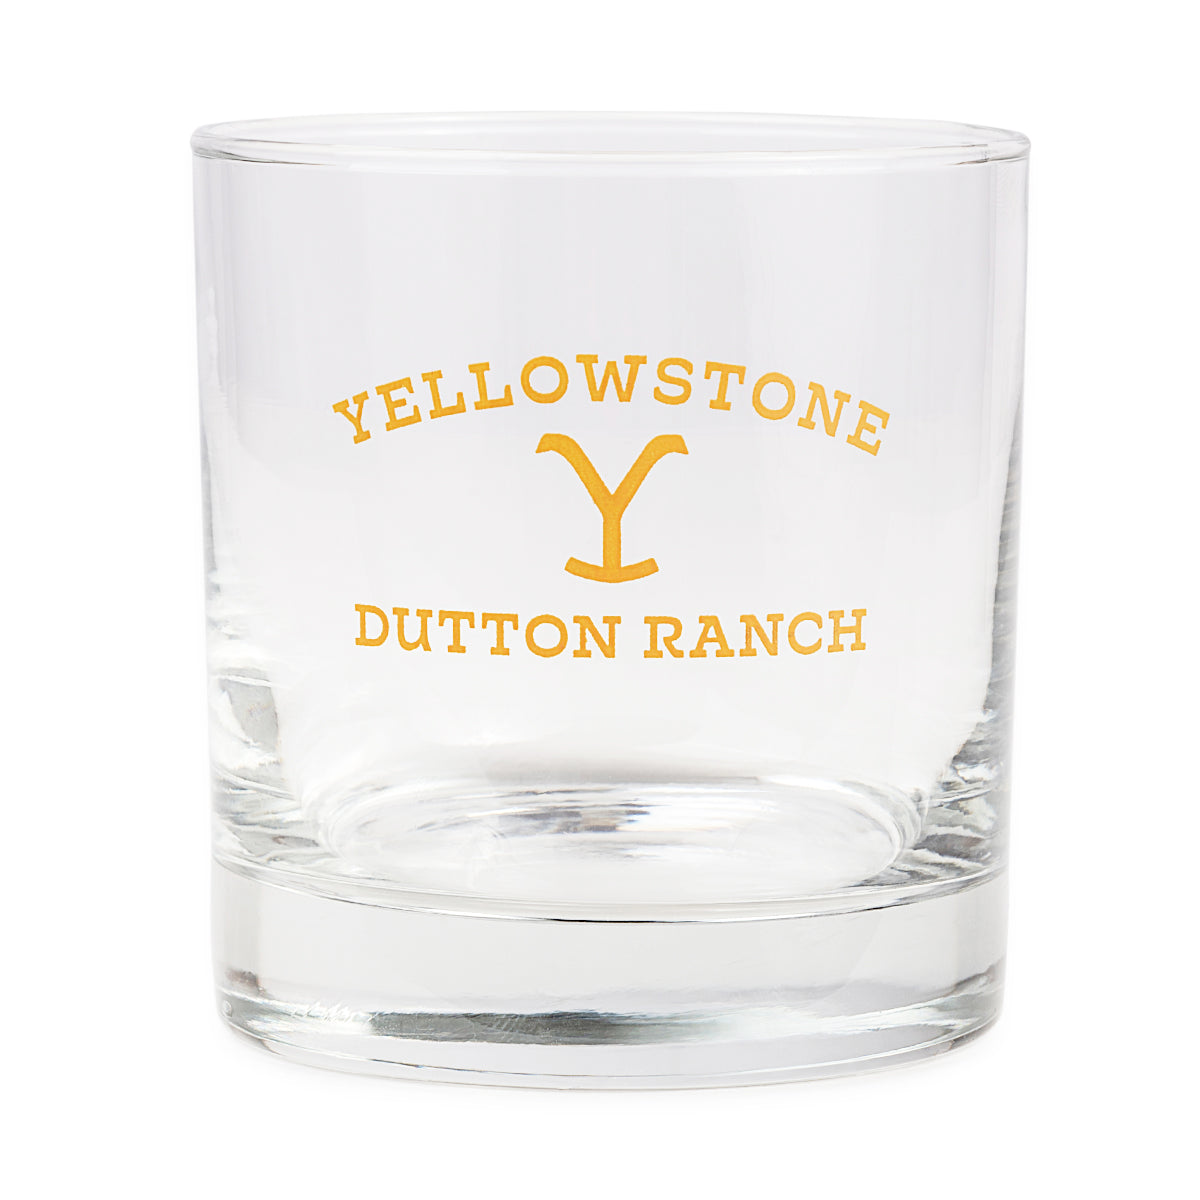 Yellowstone Dutton Ranch Felsen Glas